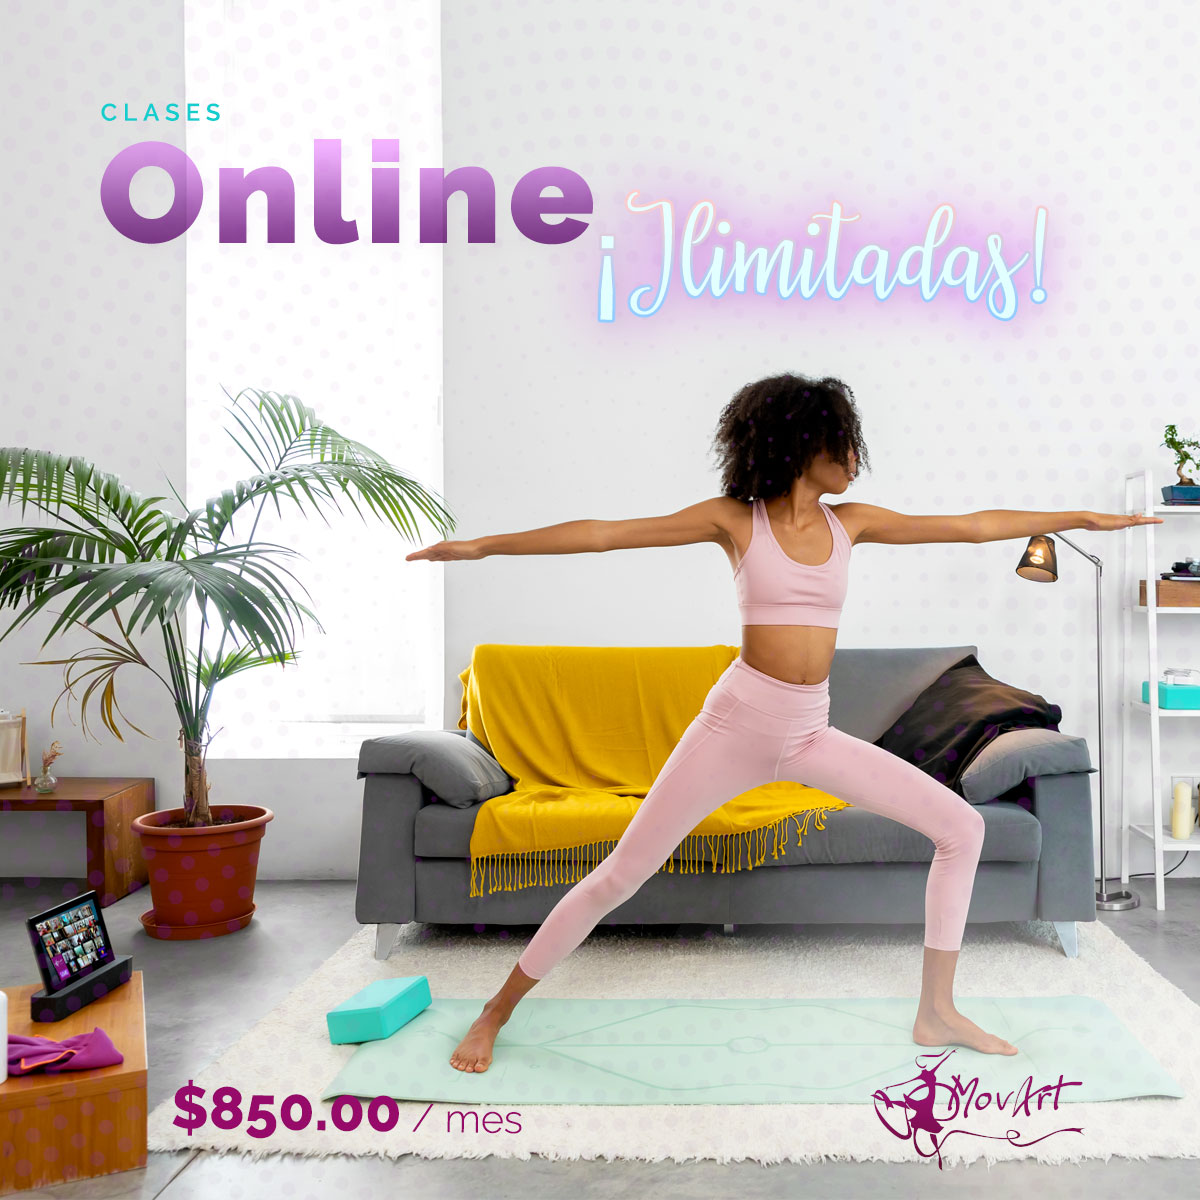 clases de baile online, aprende a bailar desde tu casa por internet. Clases ilimitadas.